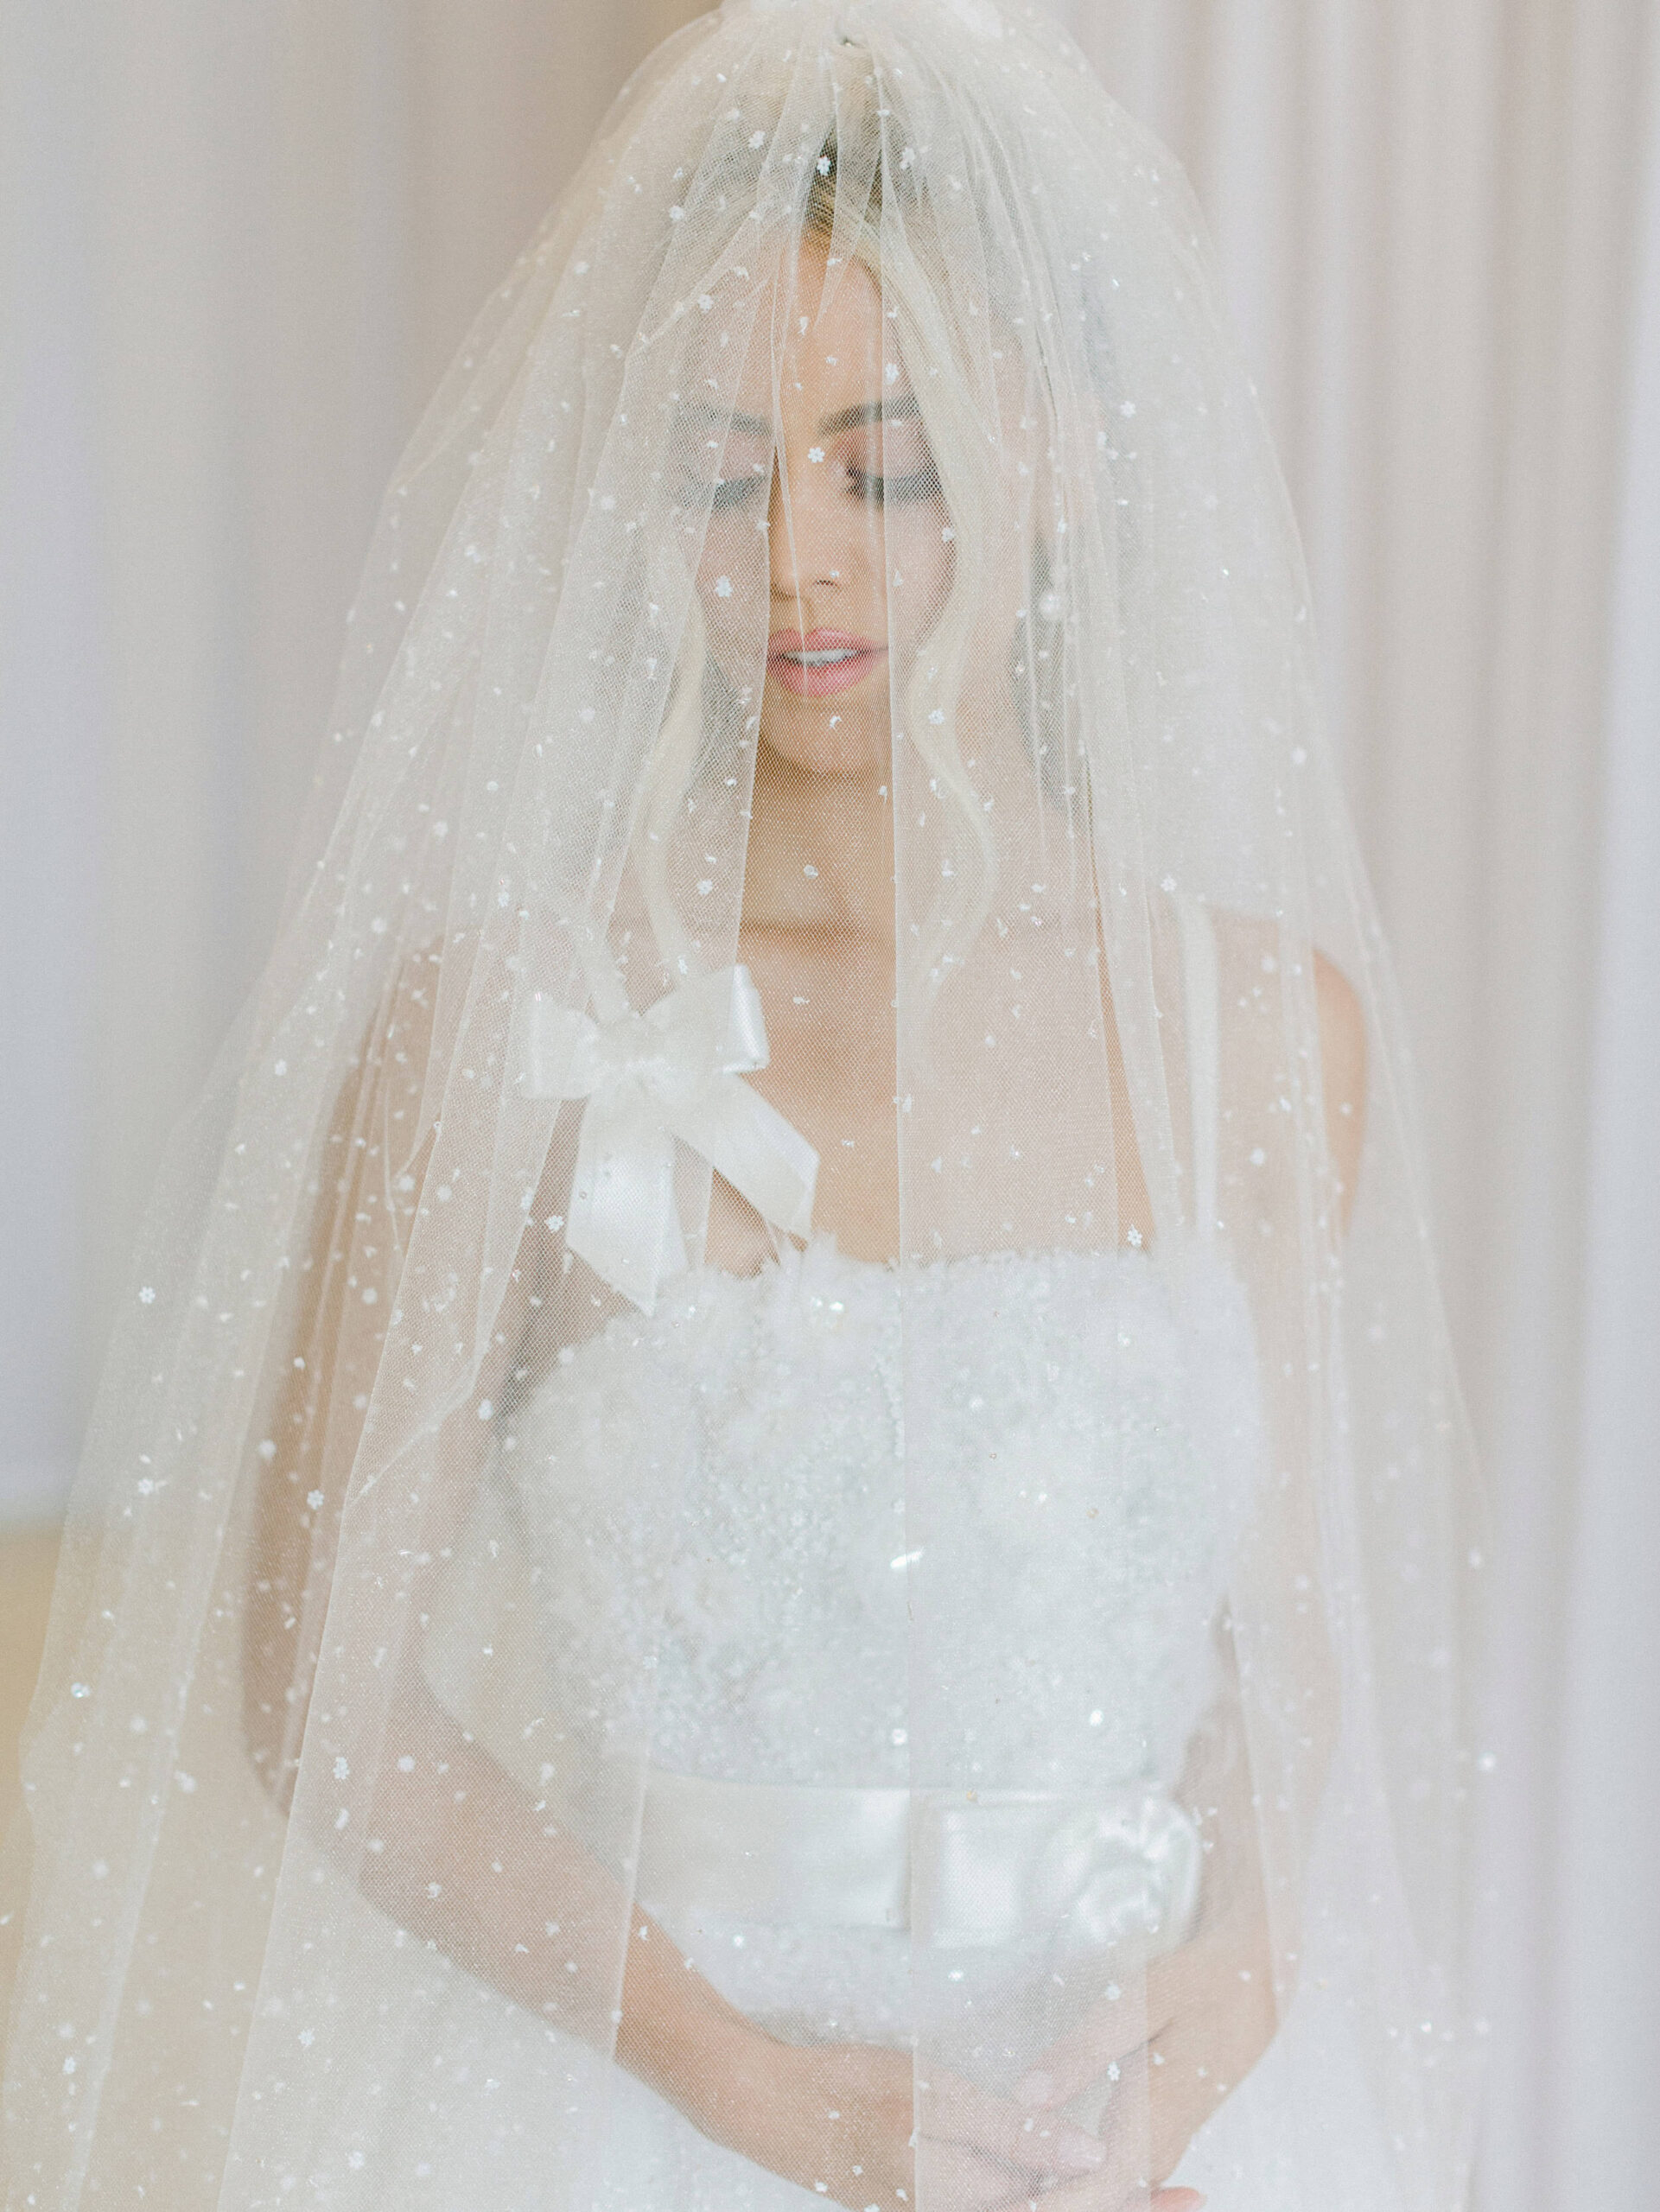 Tori's custom haute couture Chanel wedding dress